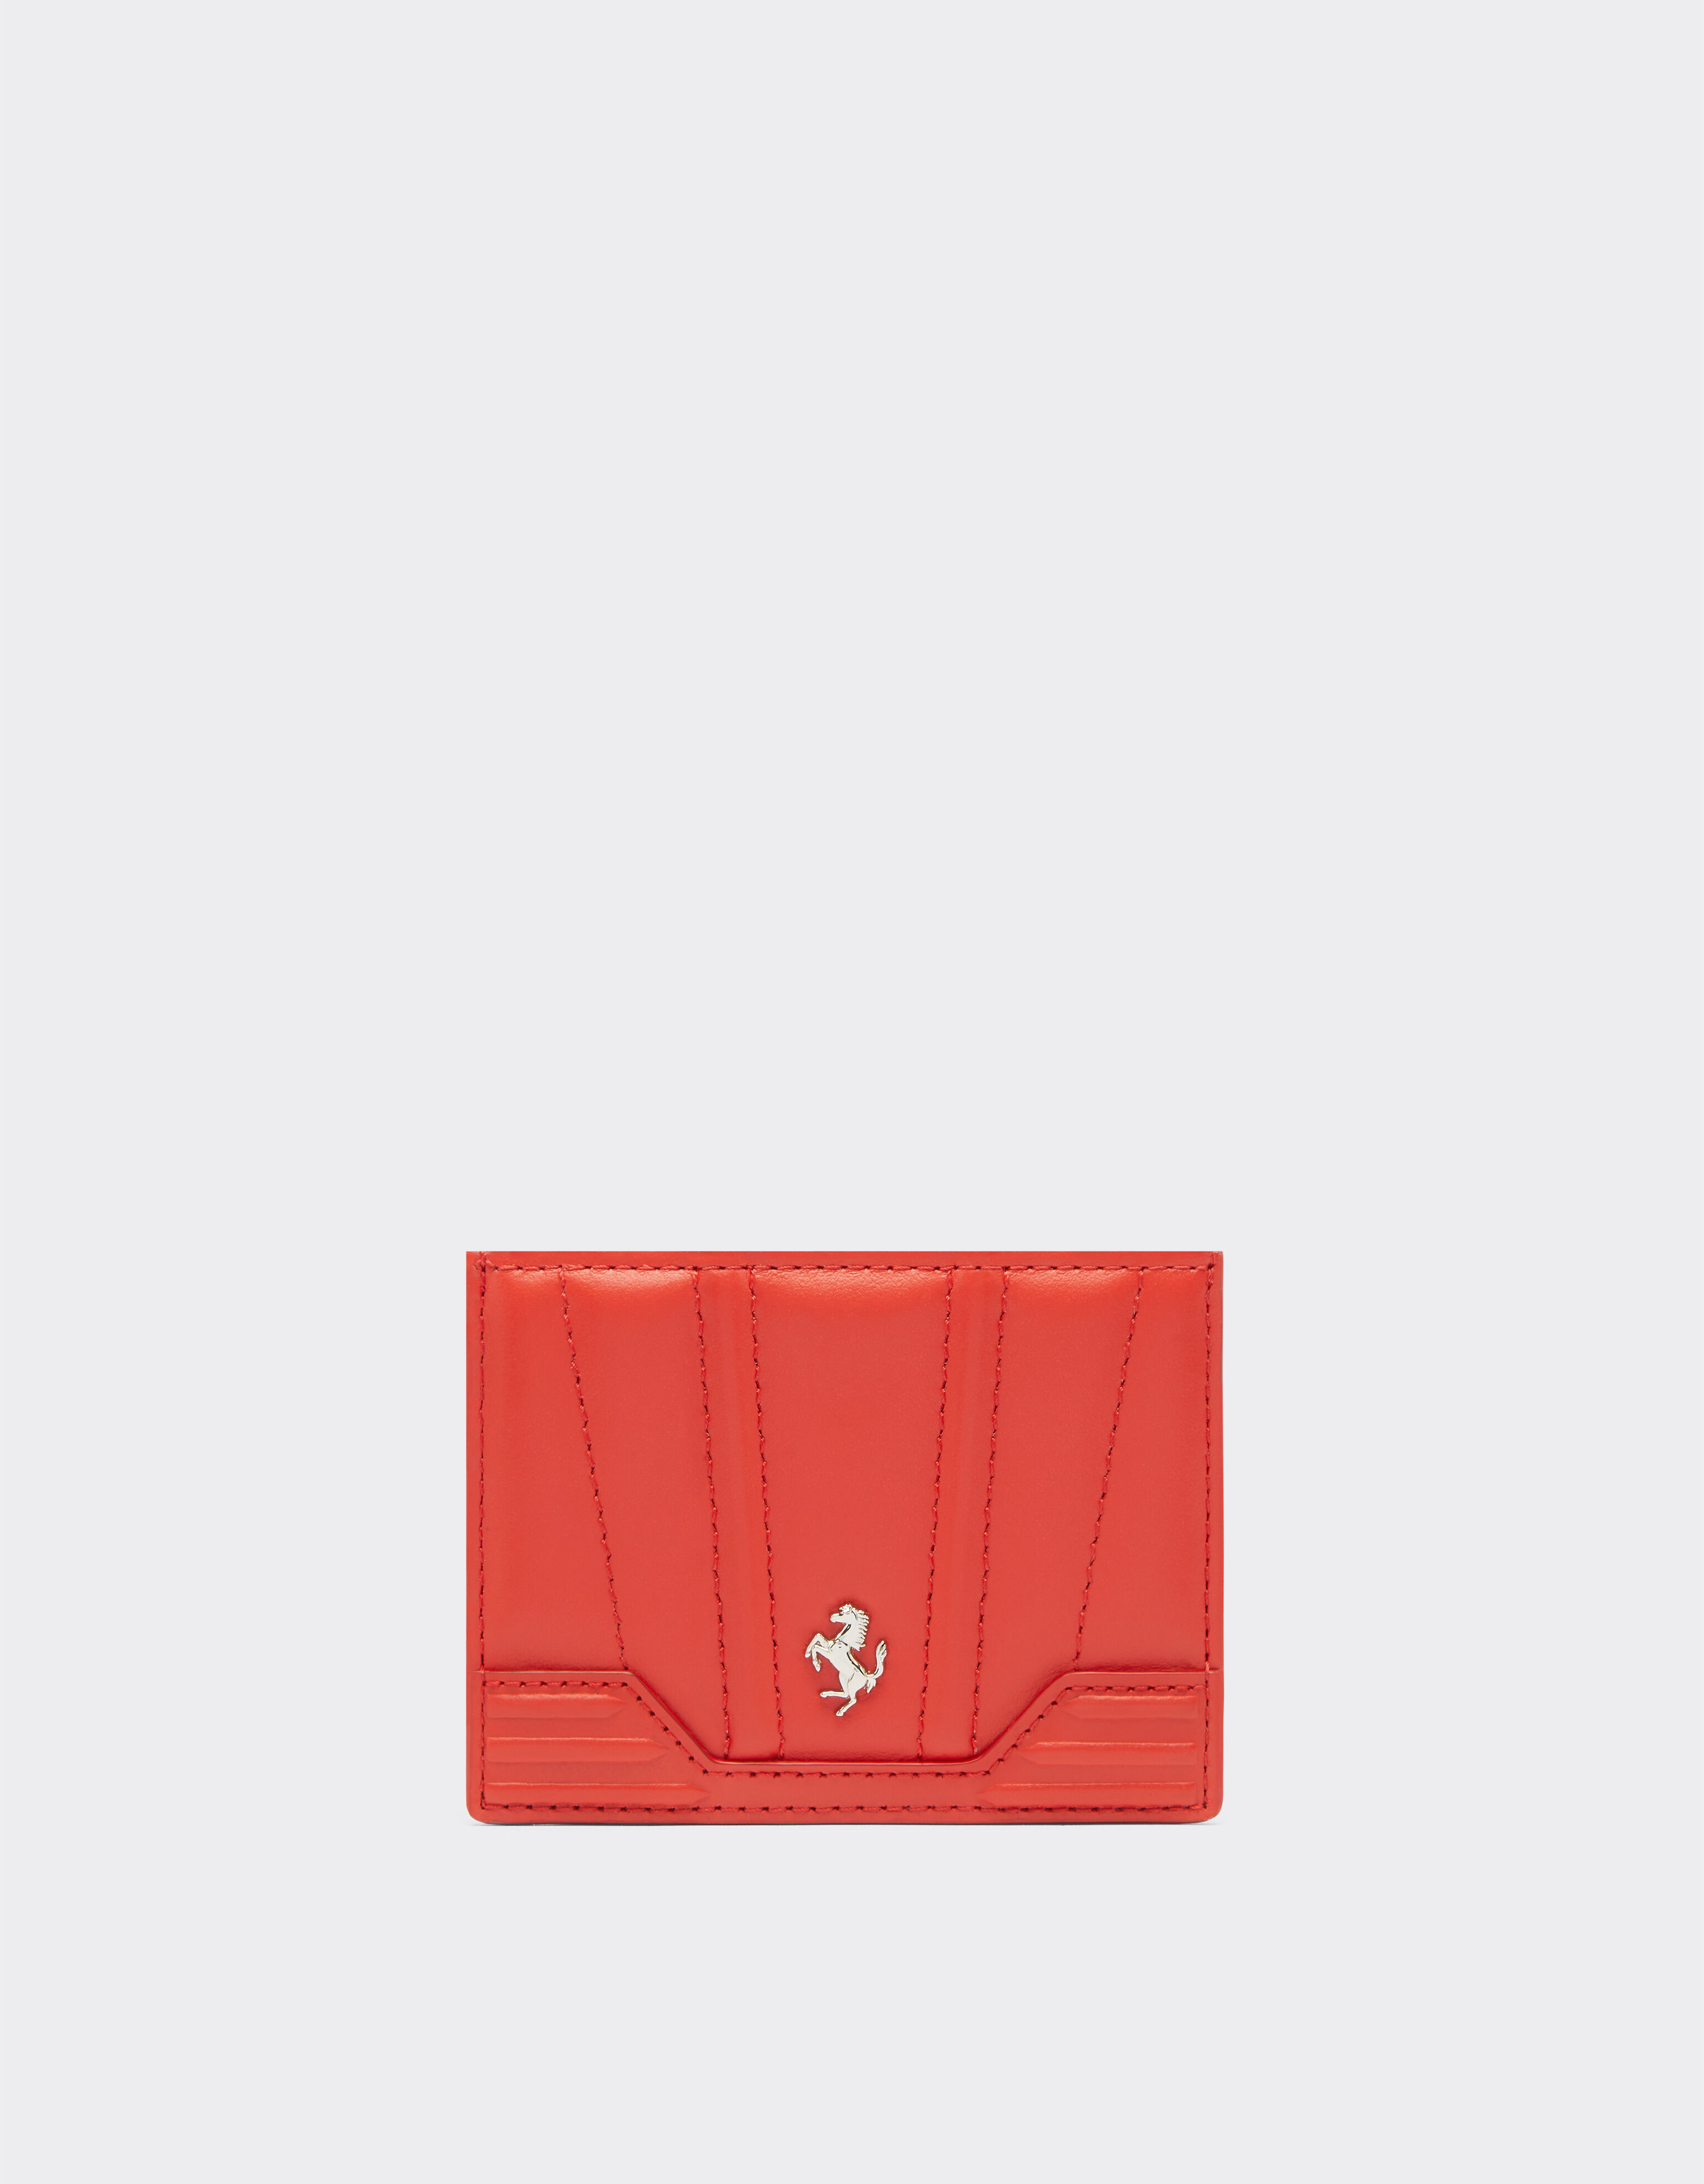 Ferrari GT Ferrari leather card holder with livery motif Rosso Dino 20604f